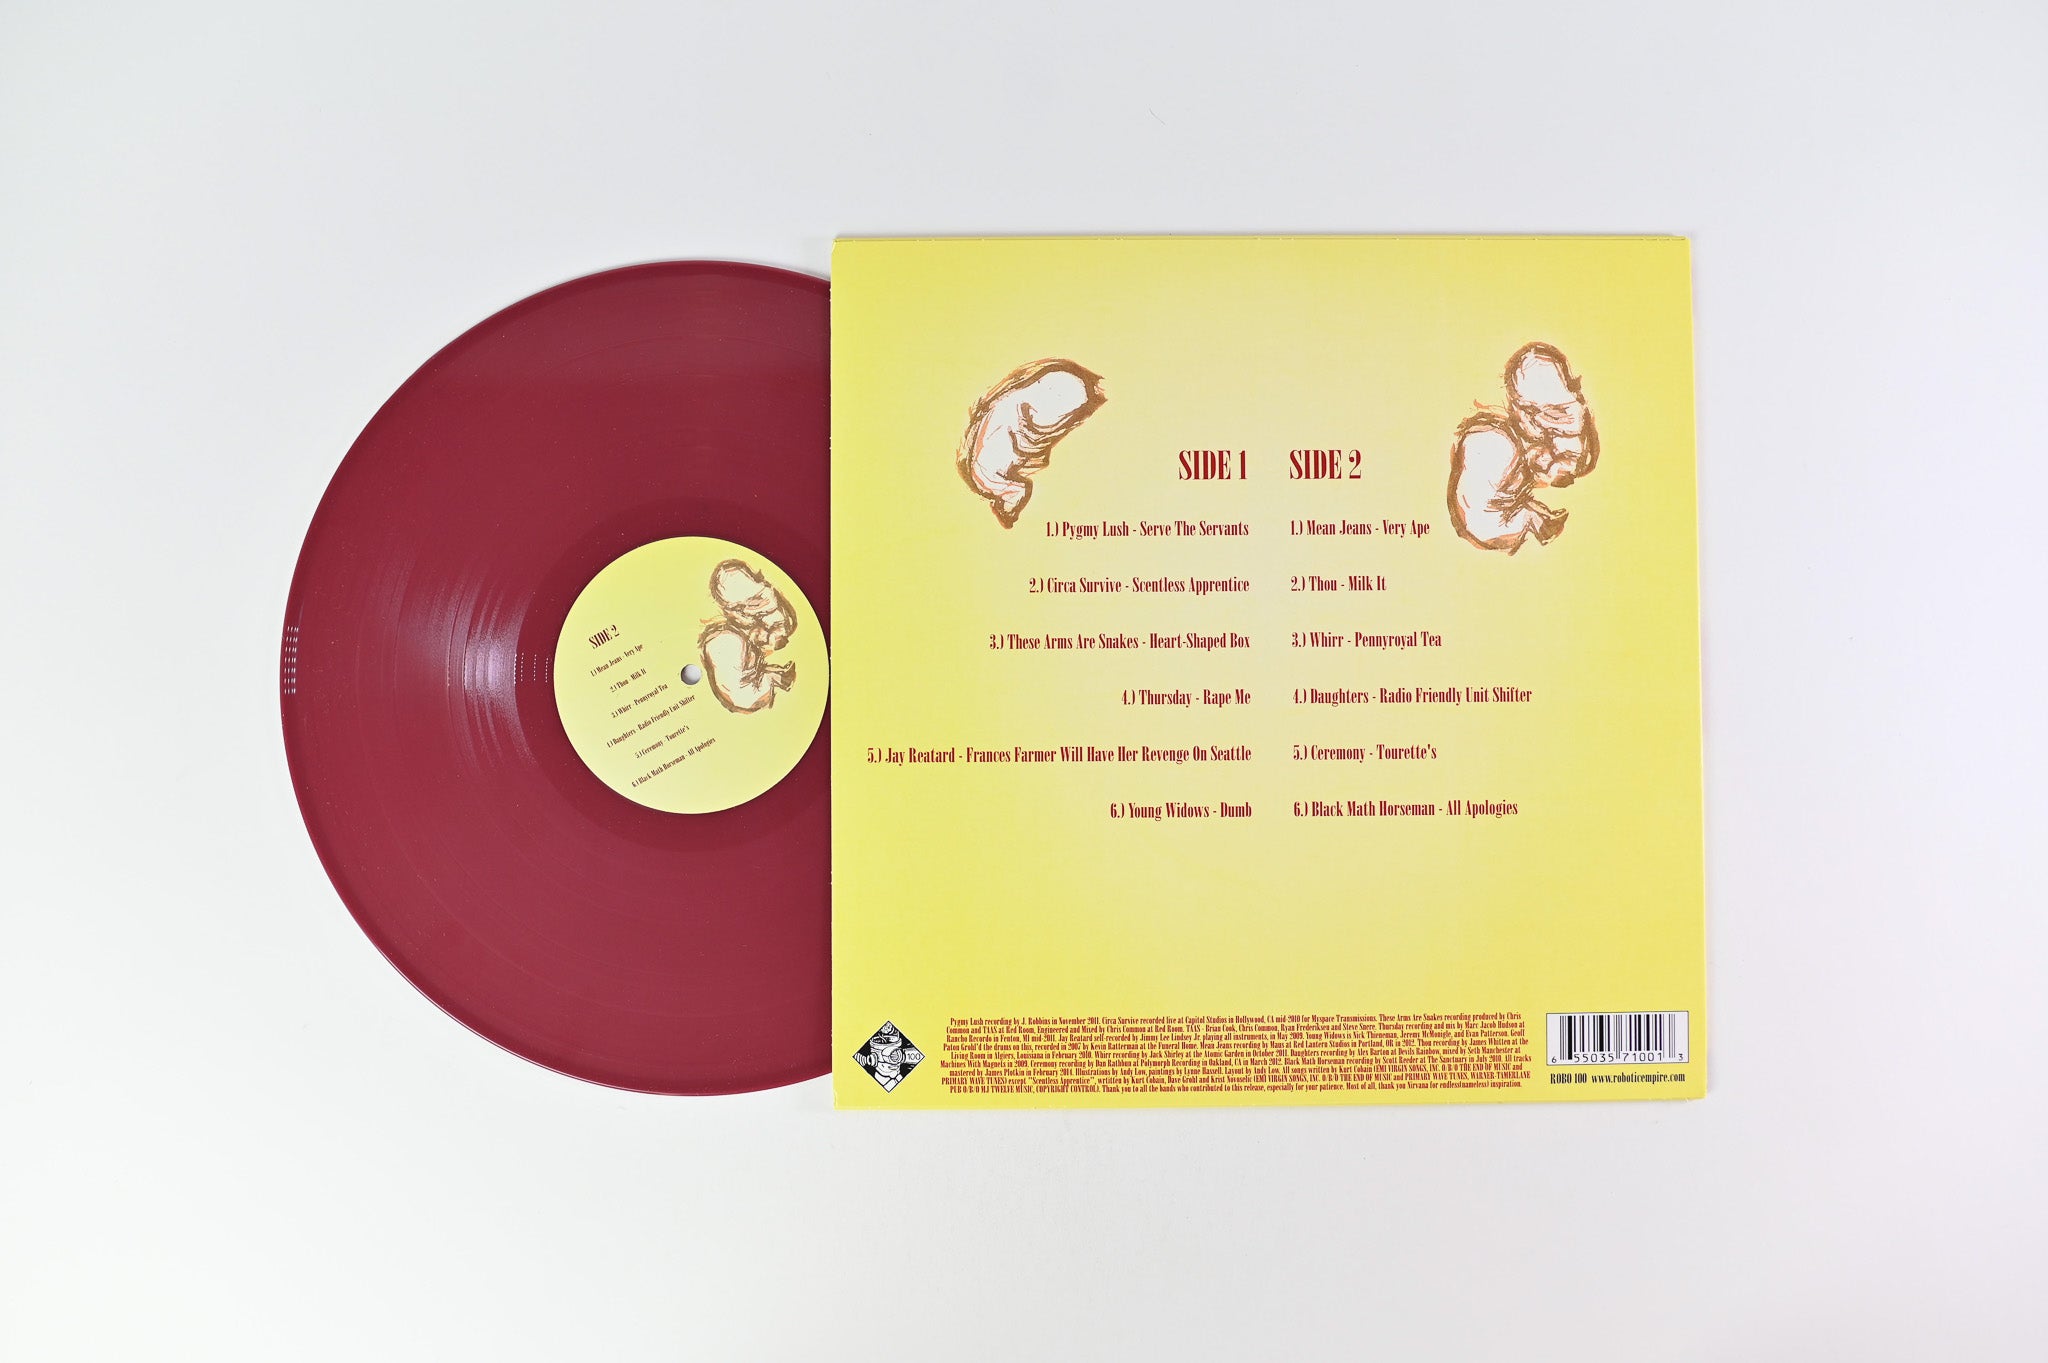 Various - In Utero: In Tribute on Robotic Empire Maroon Opaque Vinyl